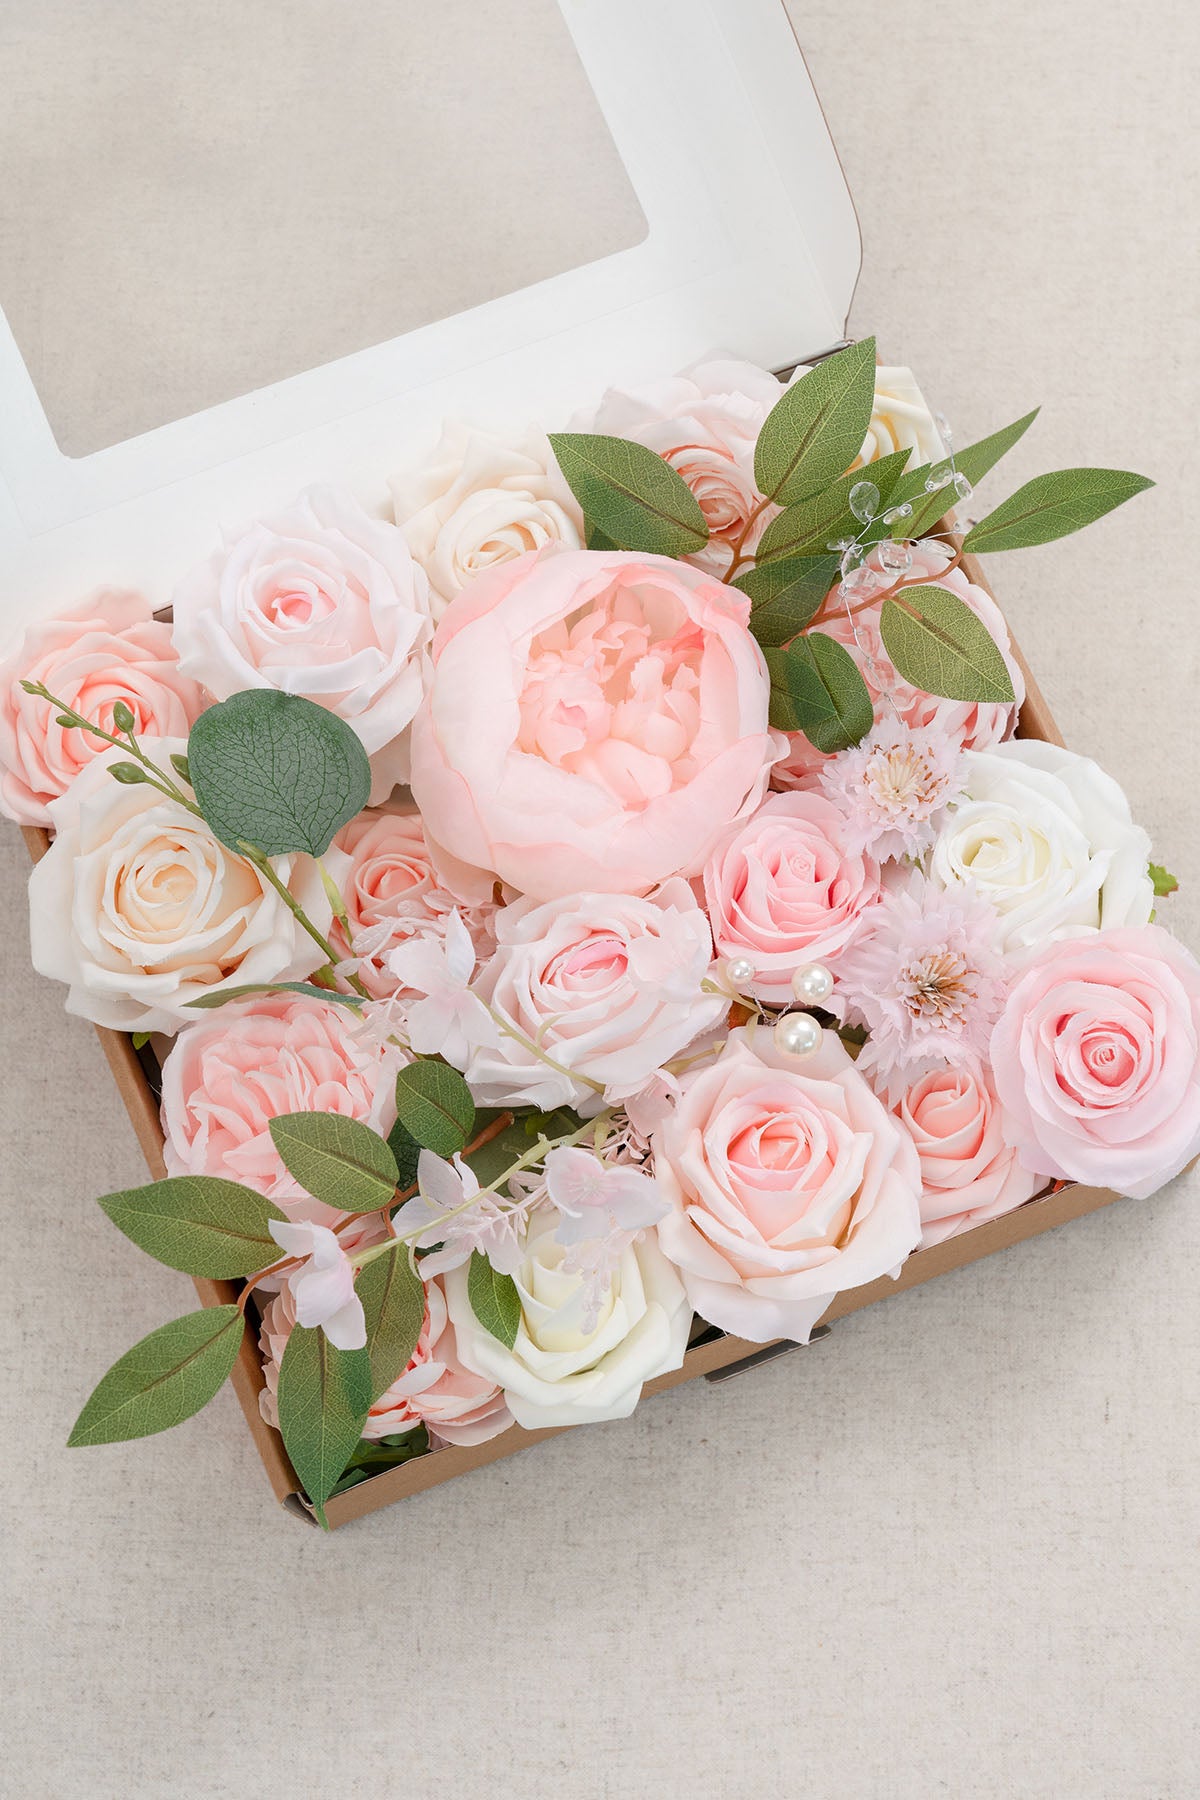 DIY Designer Flower Boxes in Blush & Cream